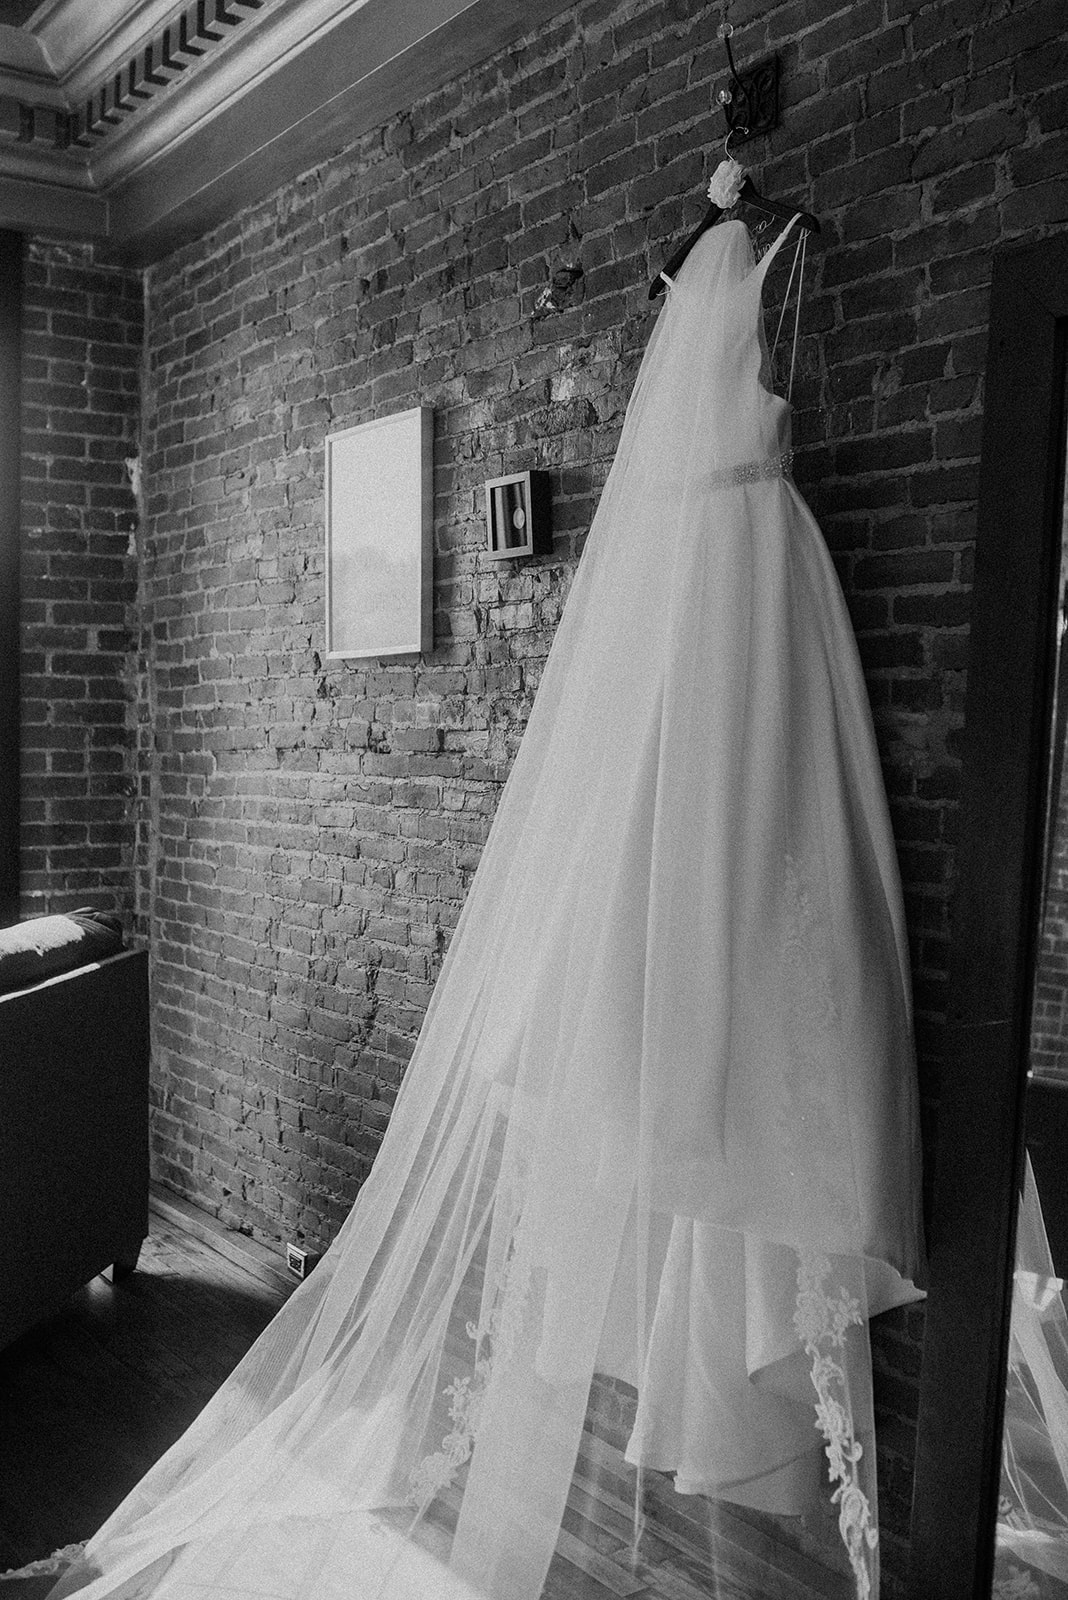 Wedding dress hanging on brick wall